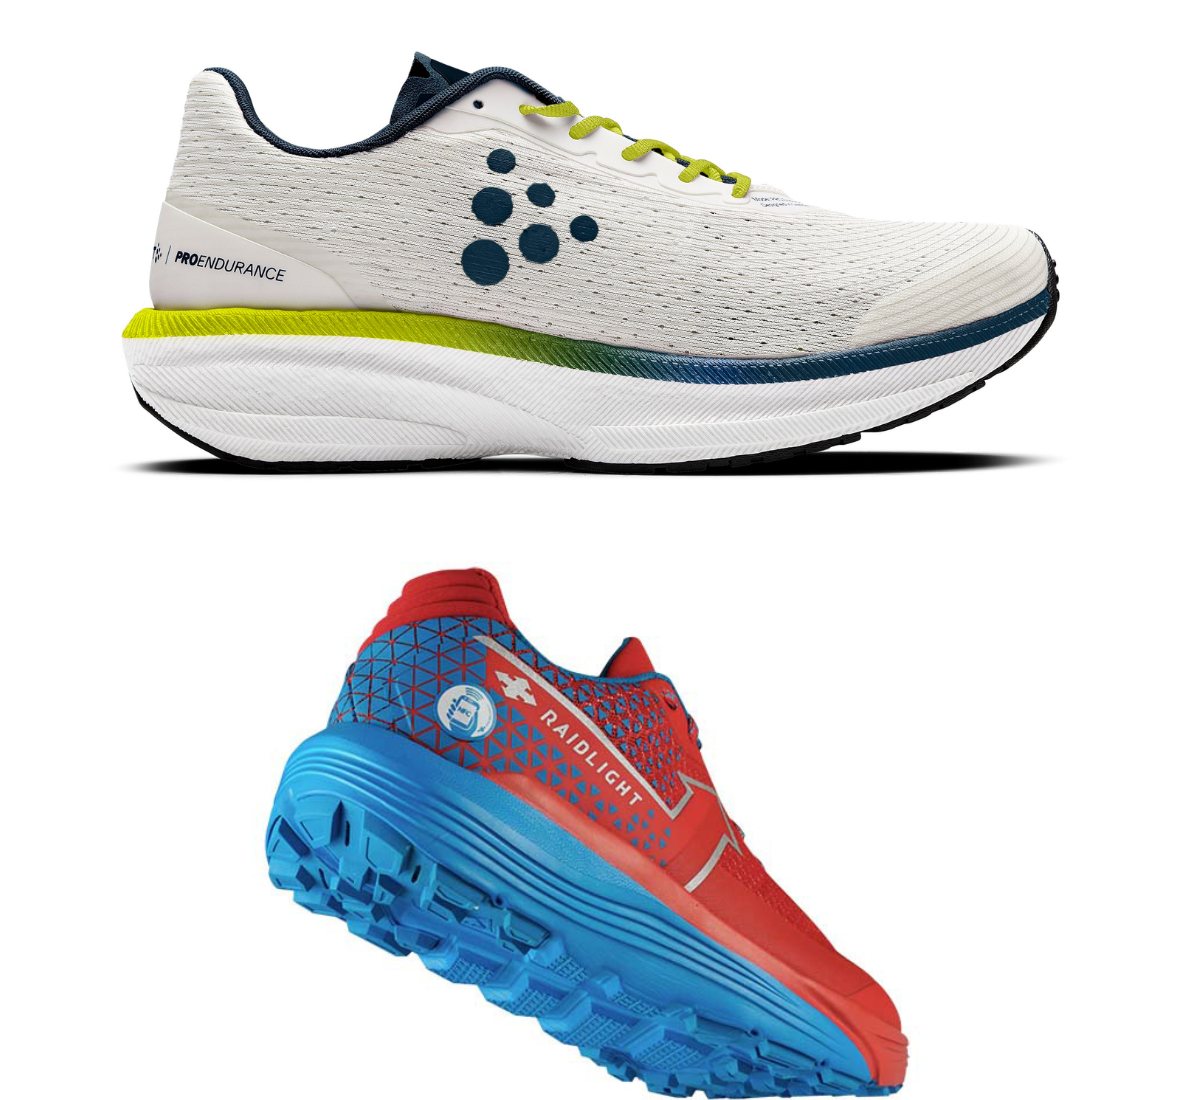 Chaussure de running: comment choisir une paire adaptée ?